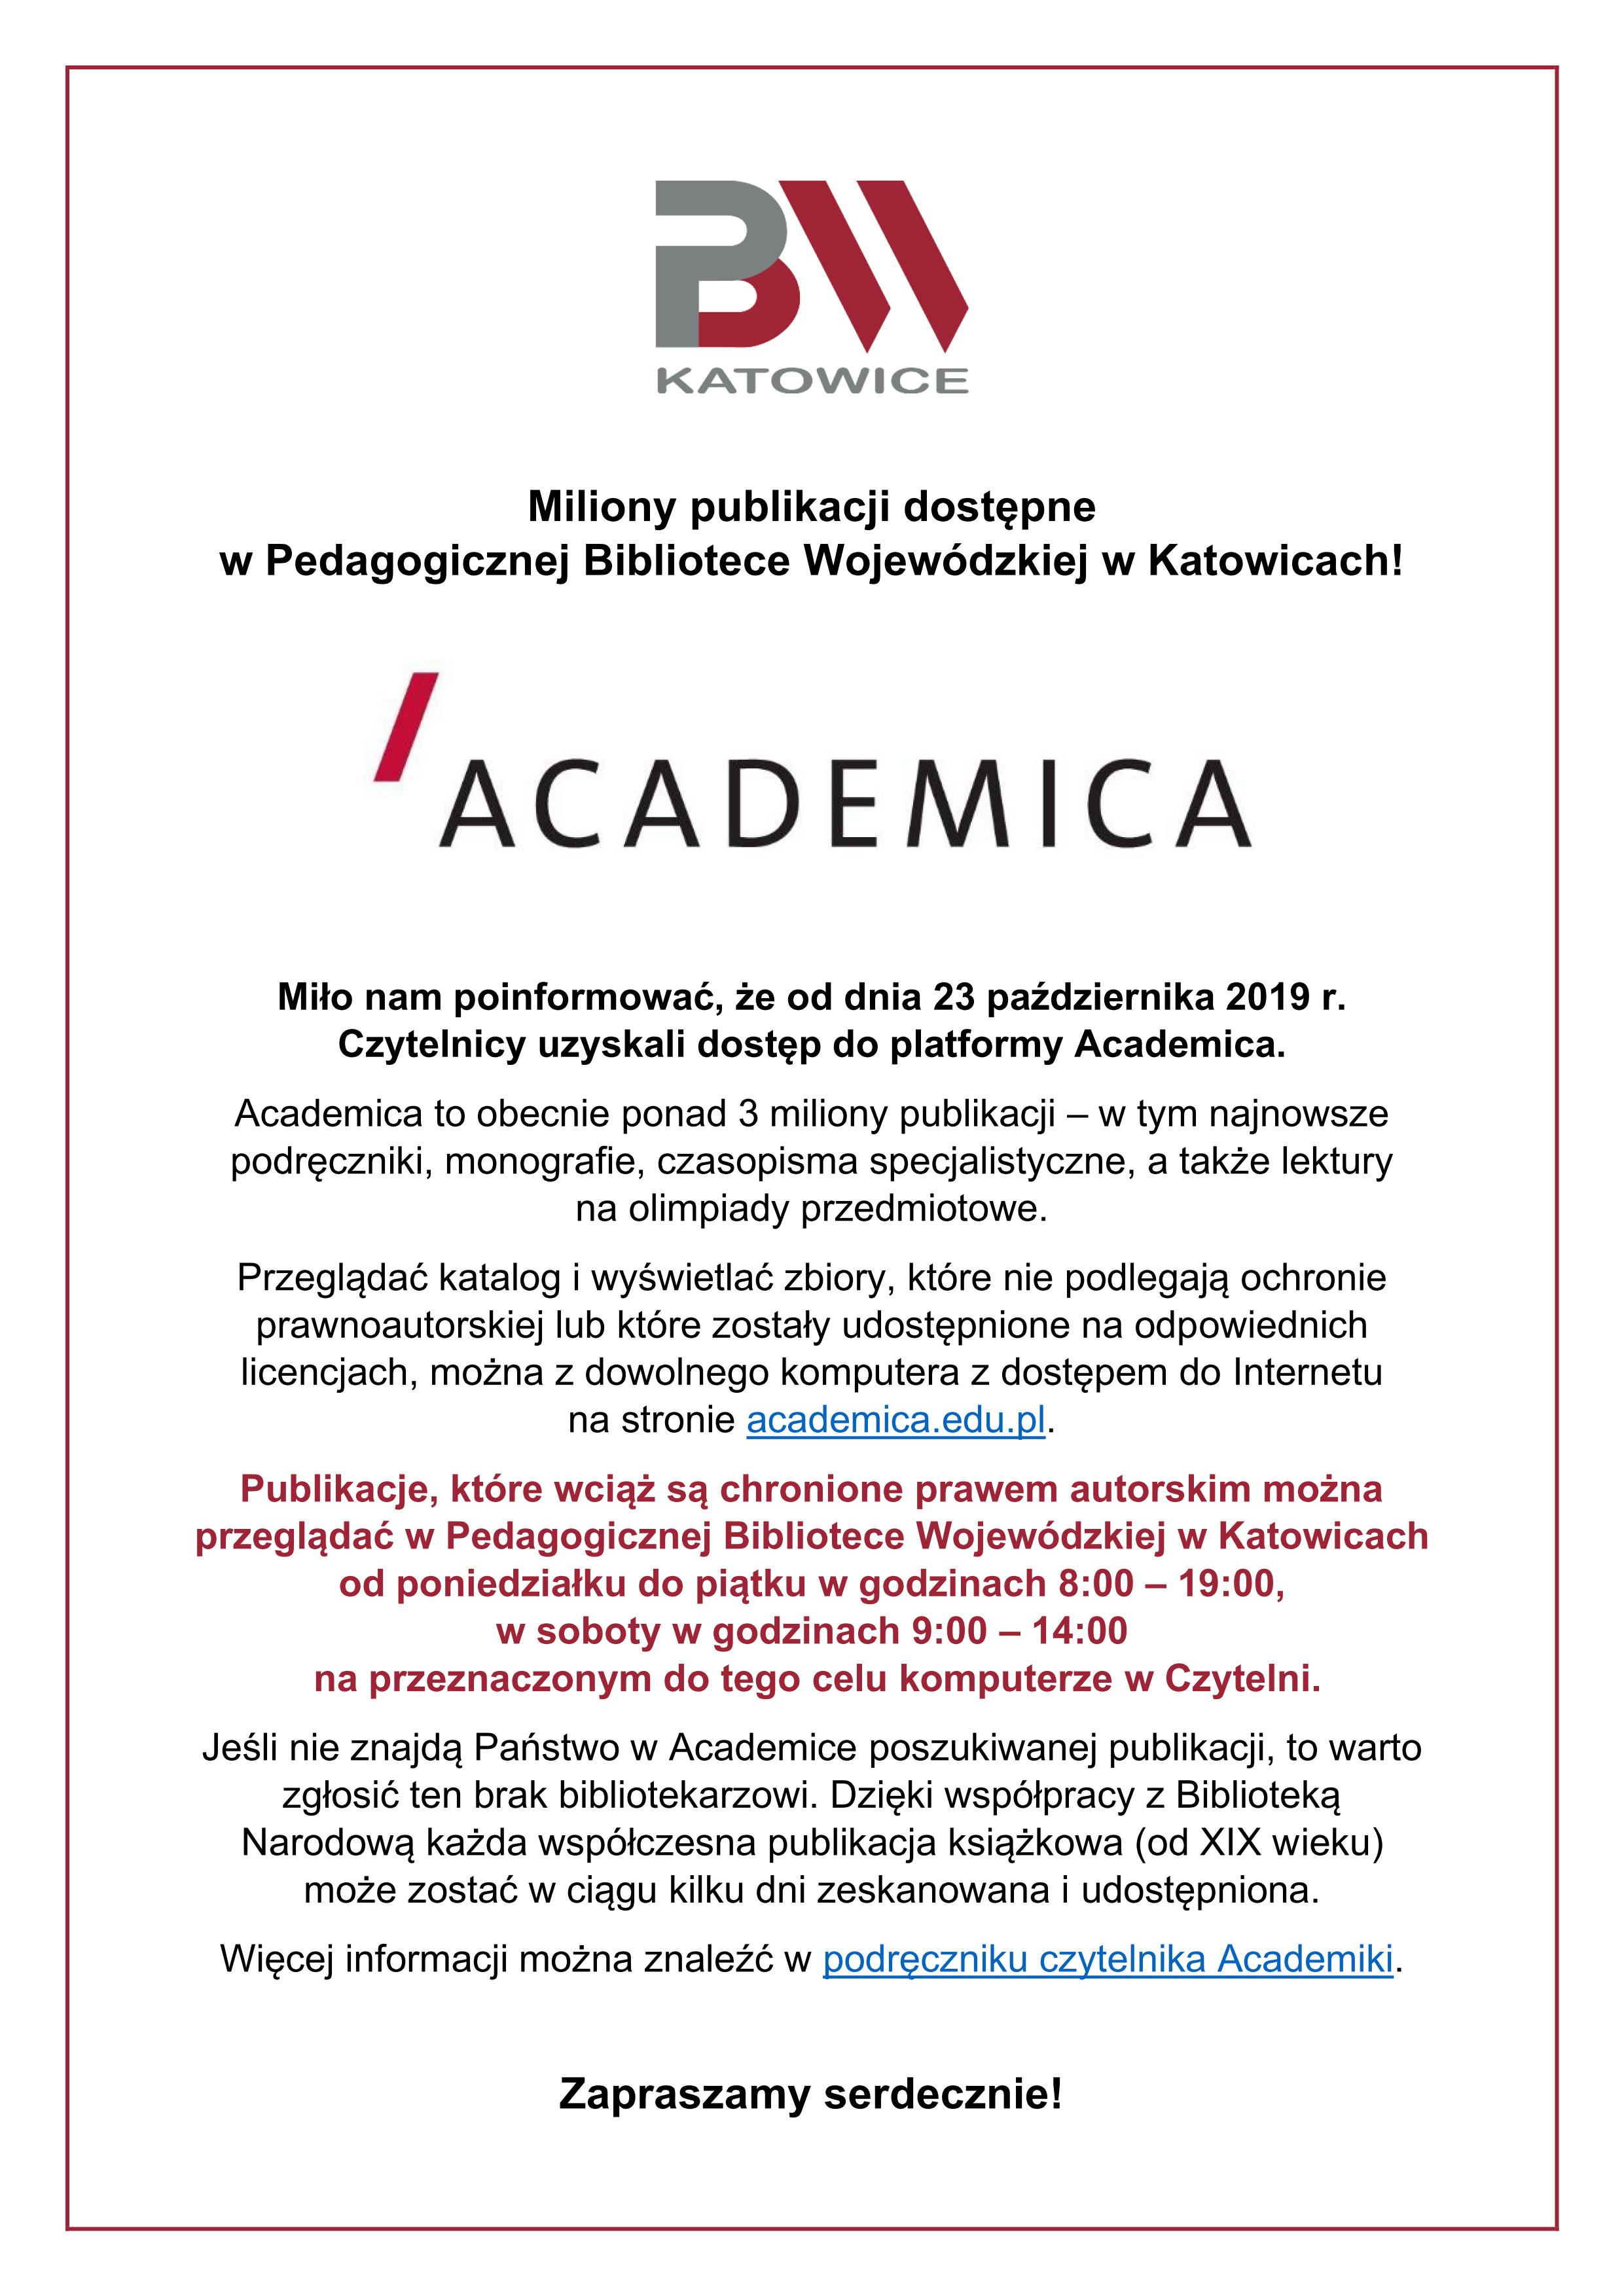 Academica - informacje